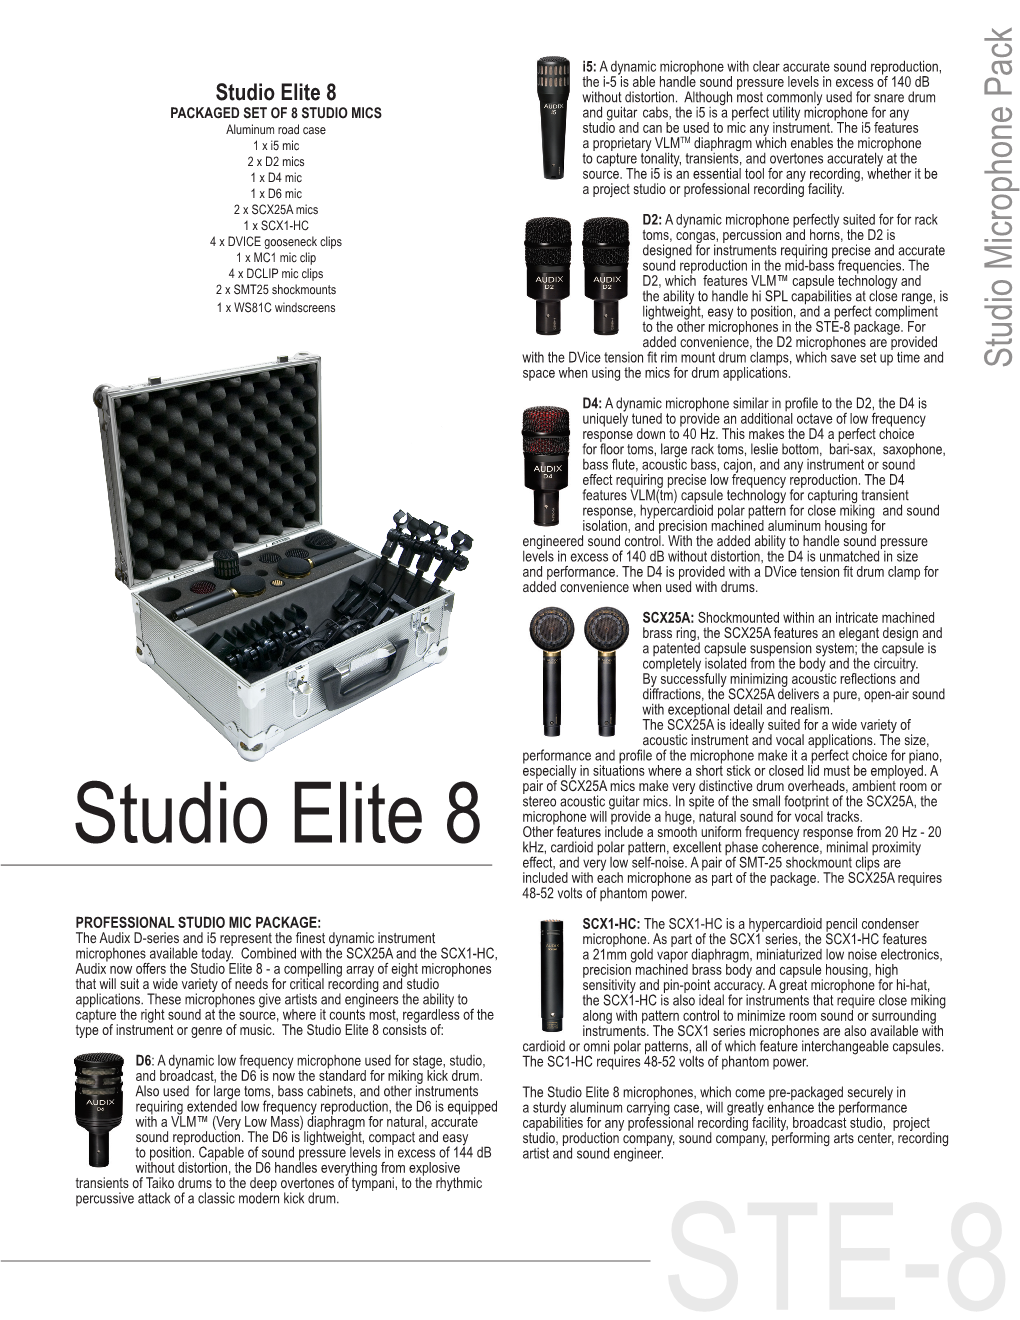 Studio Elite 8 Without Distortion